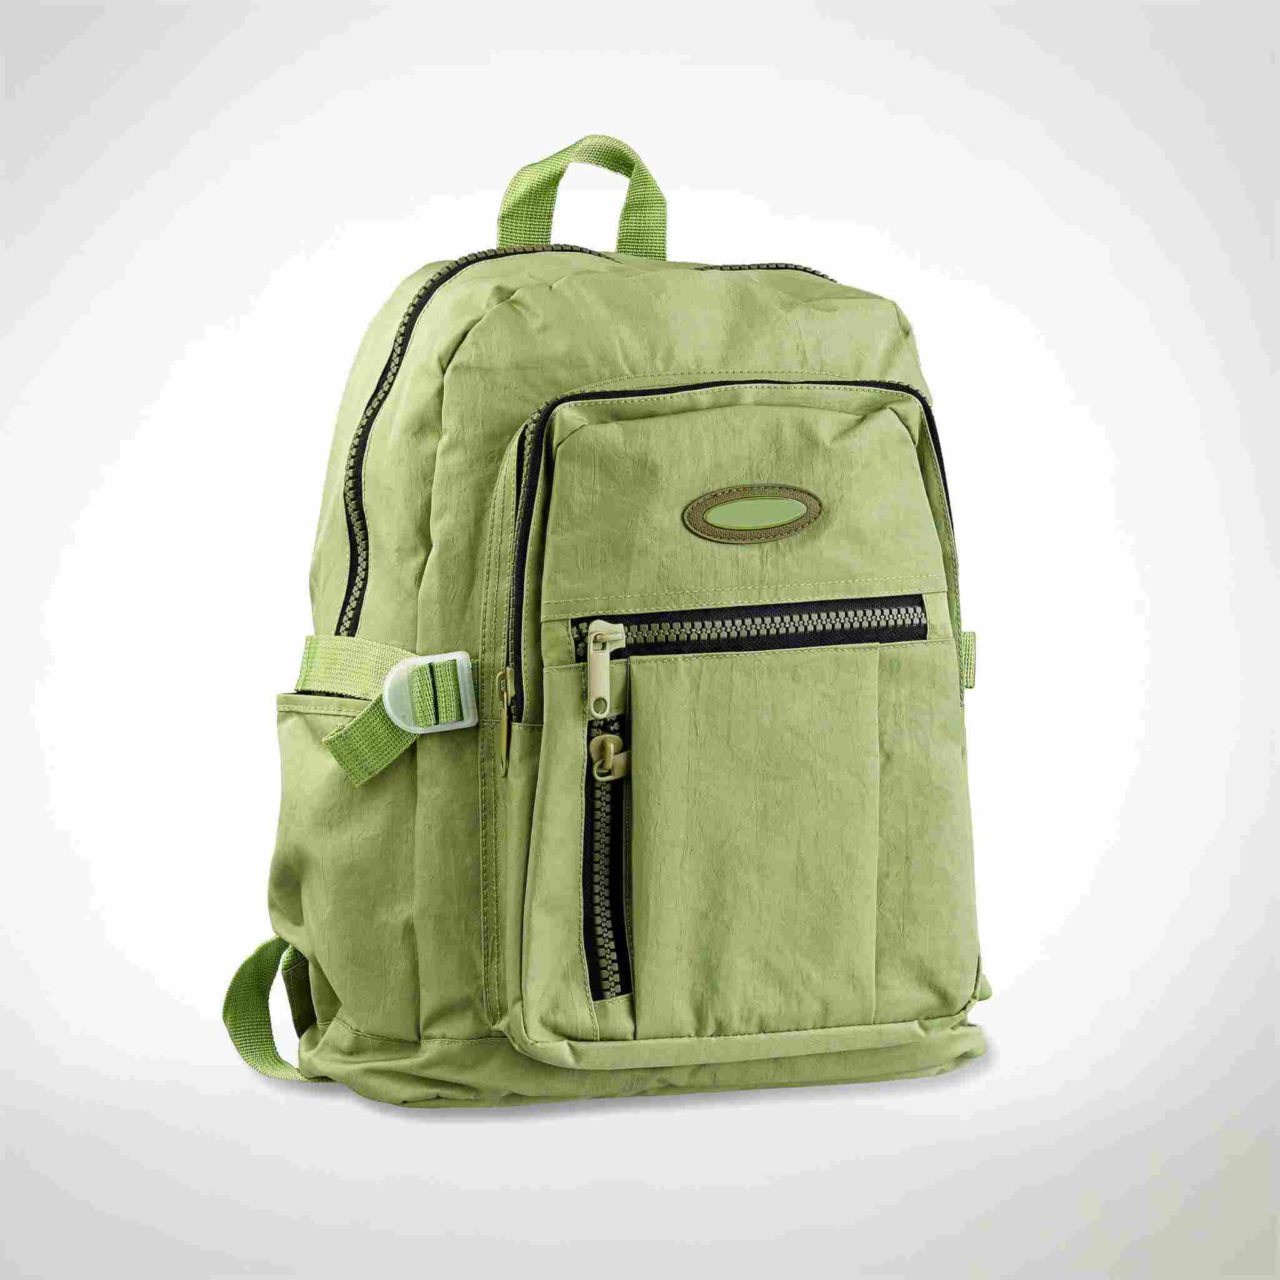 product-green-backpack-1280x1280.jpg